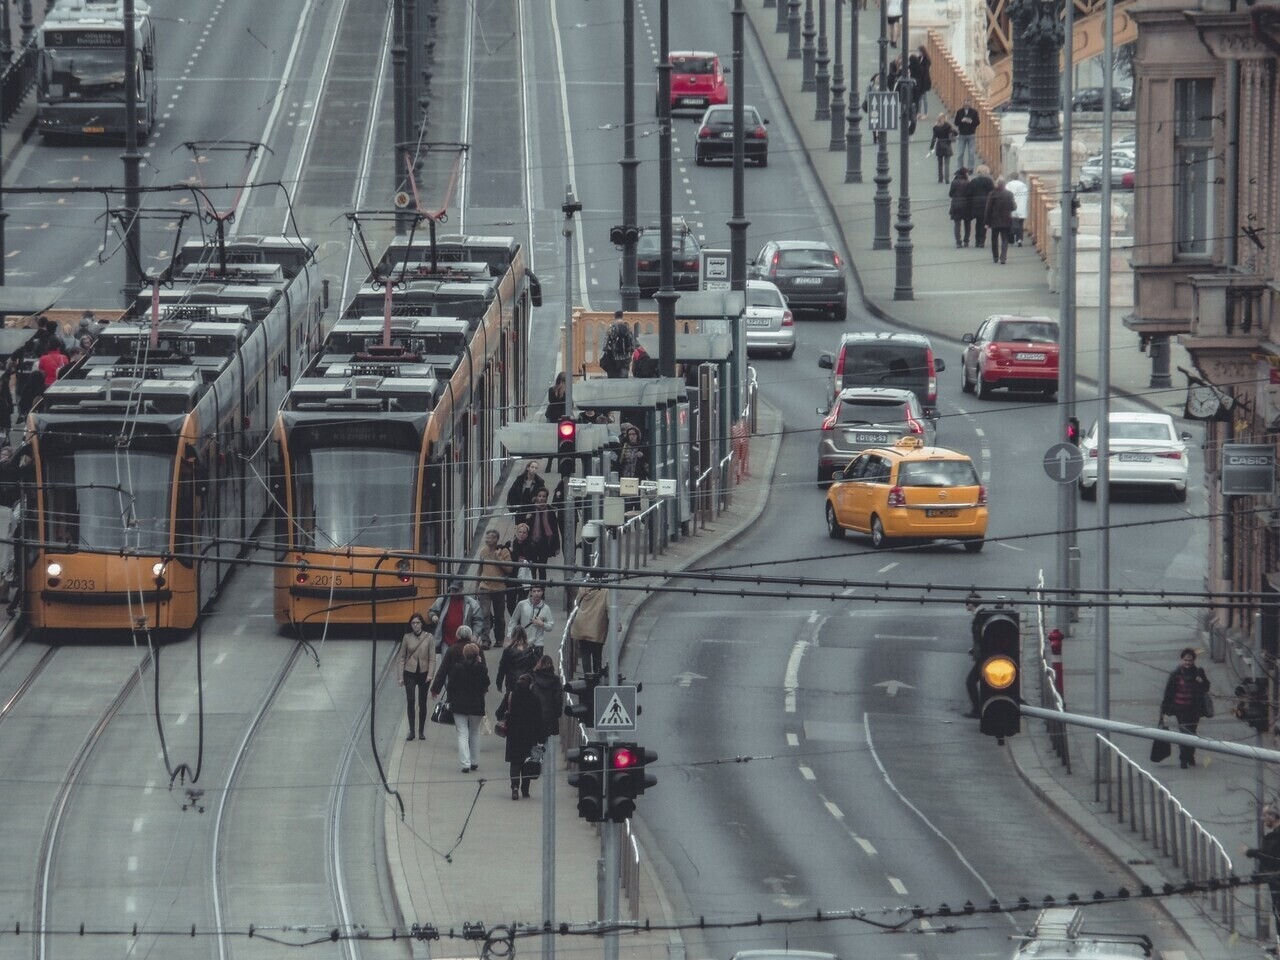 budapest bkv bkk transport tramvai